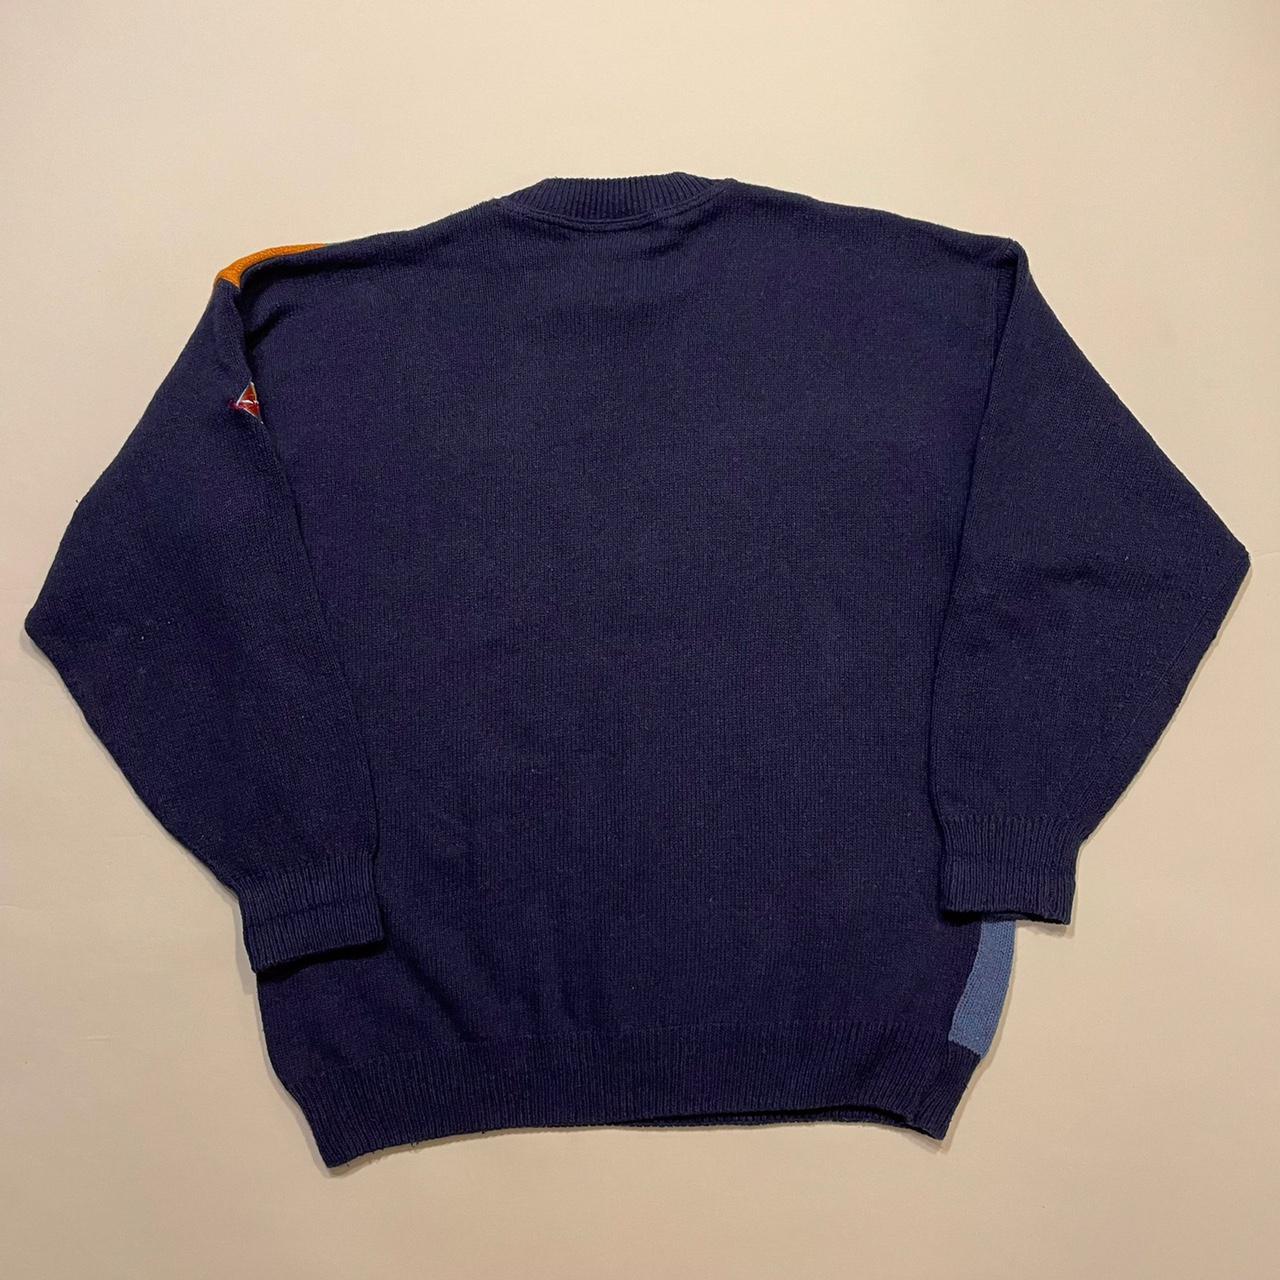 Vintage The Sweater Shop jumper colourful argyle... - Depop